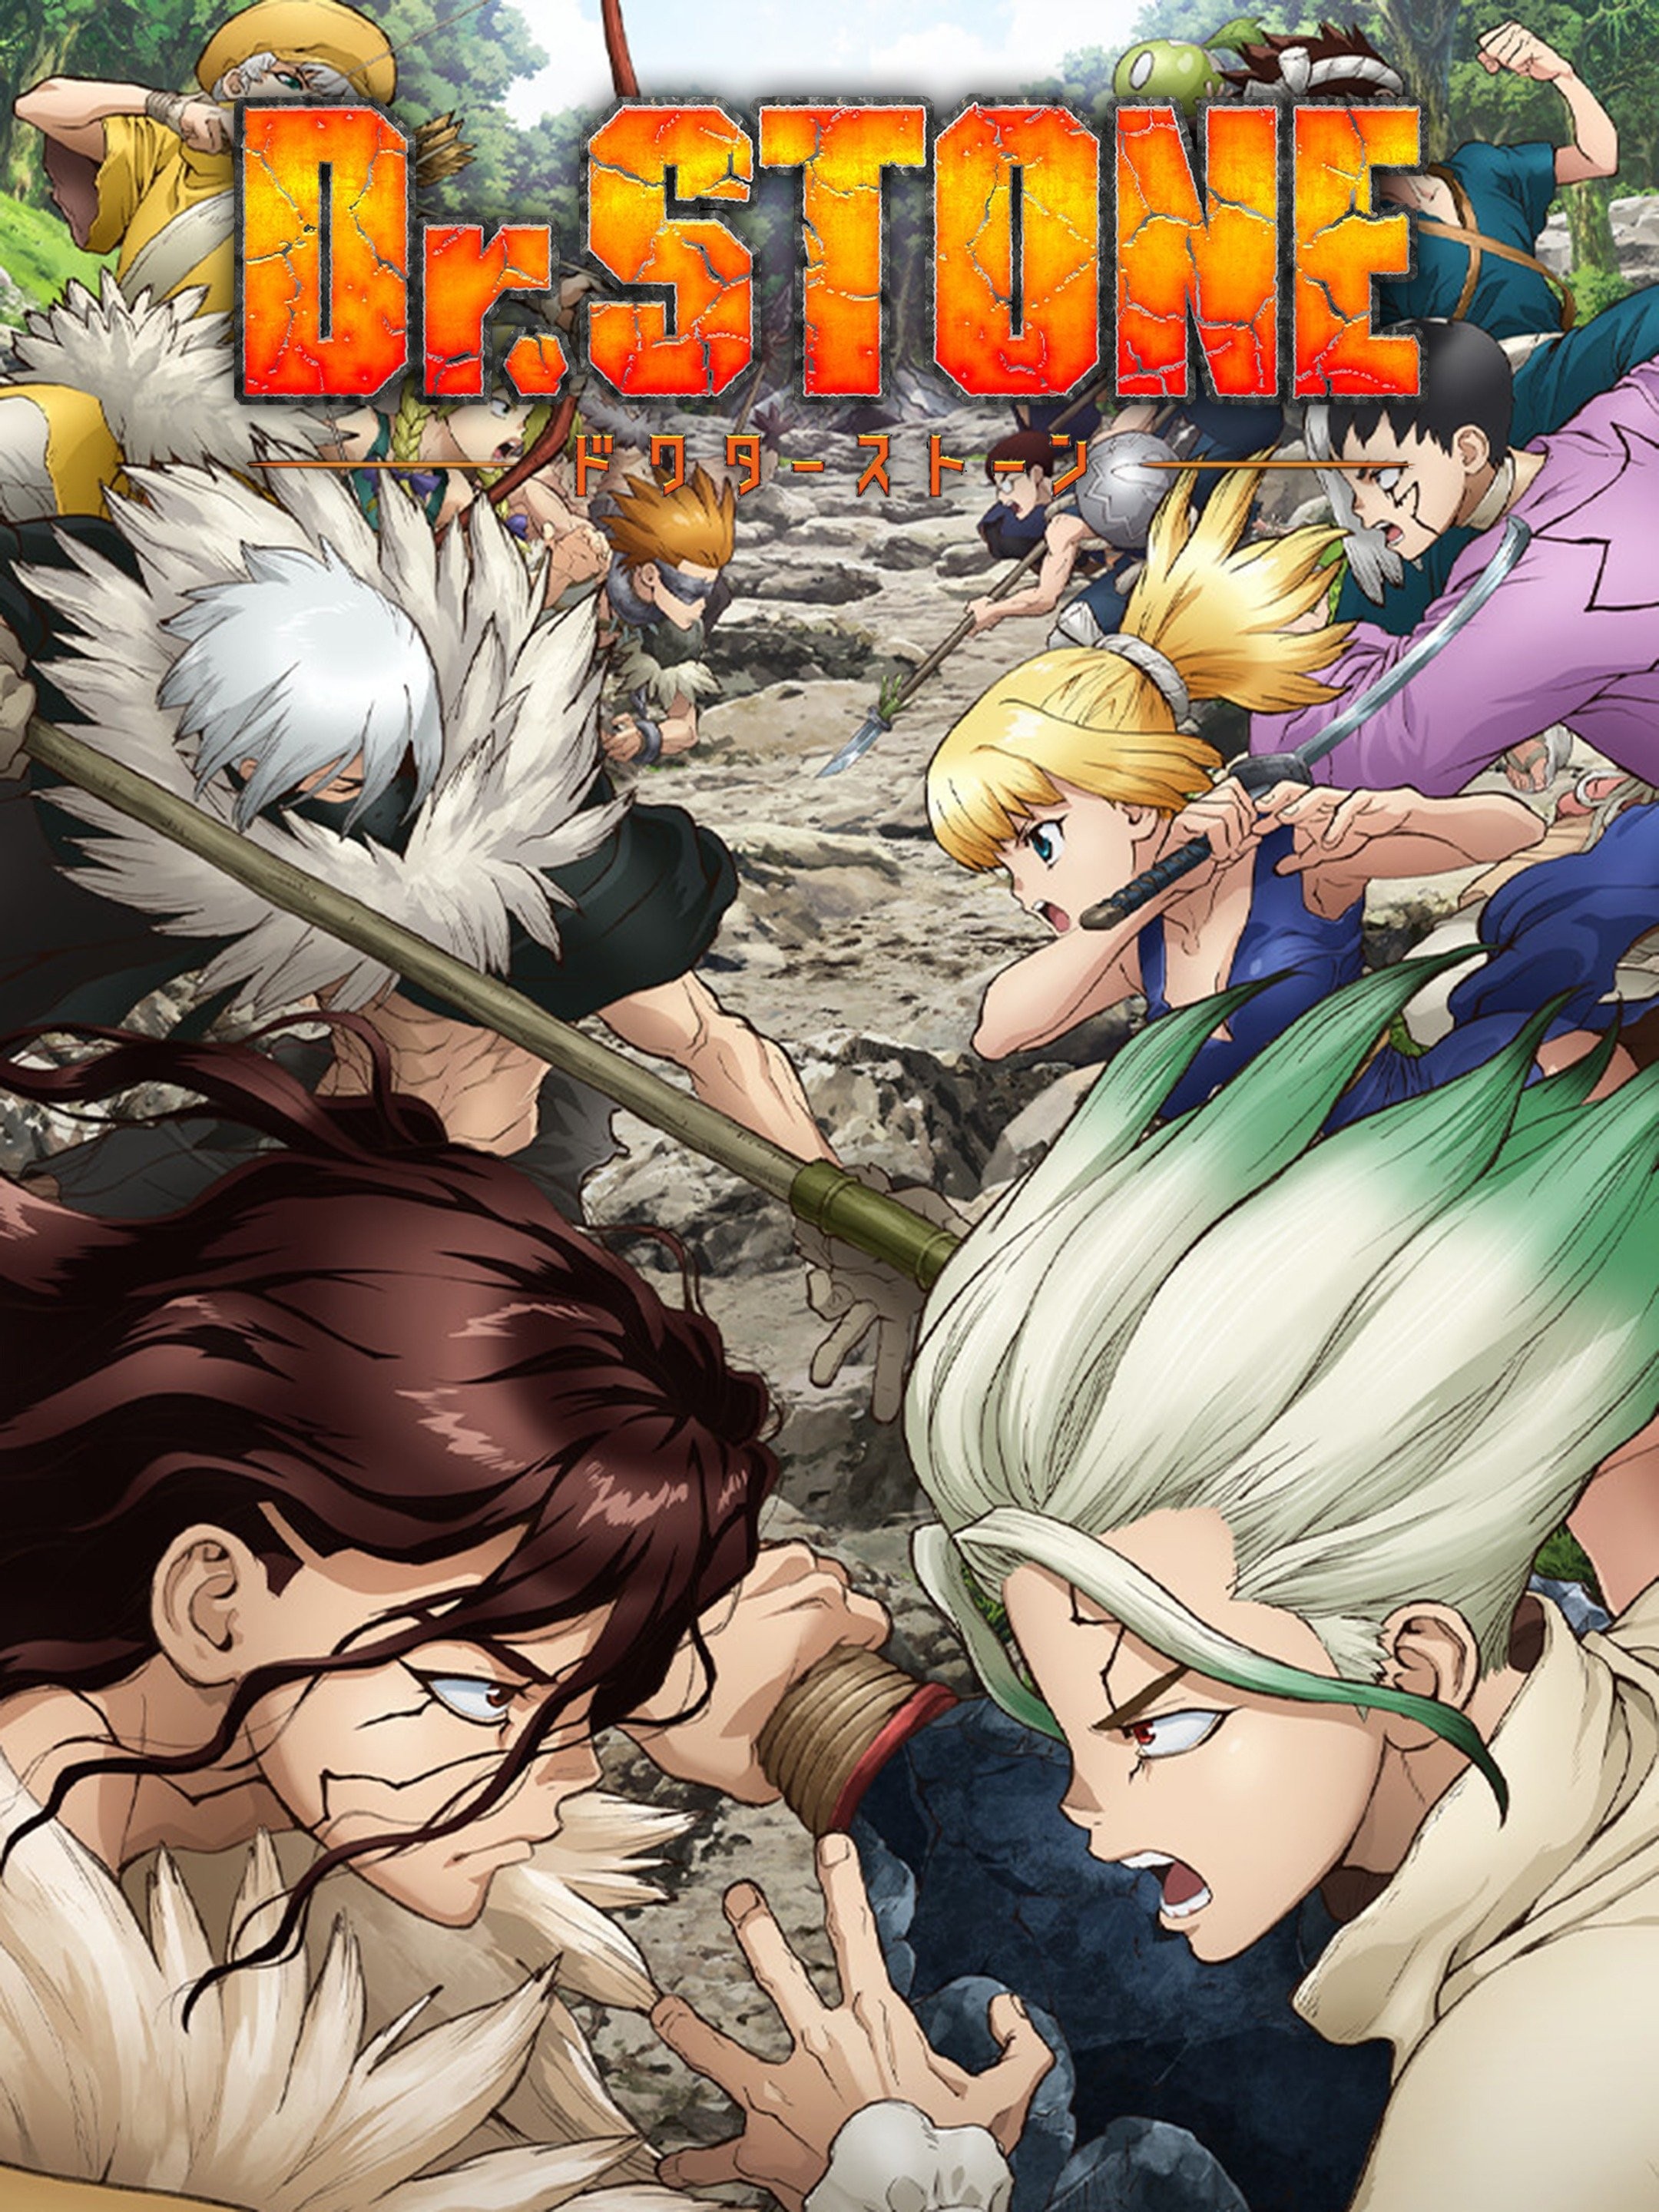 Dr Stone Stone Wars Episode 3 Nikki joins Senku